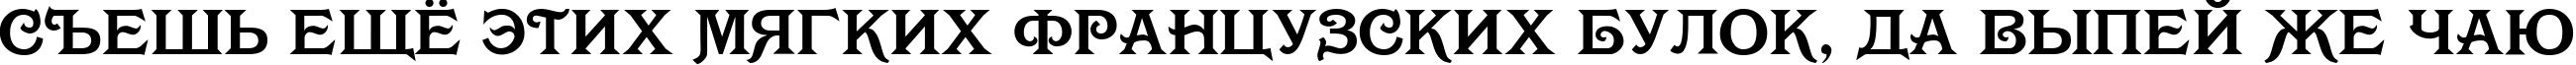 Пример написания шрифтом Olympia Deco текста на русском